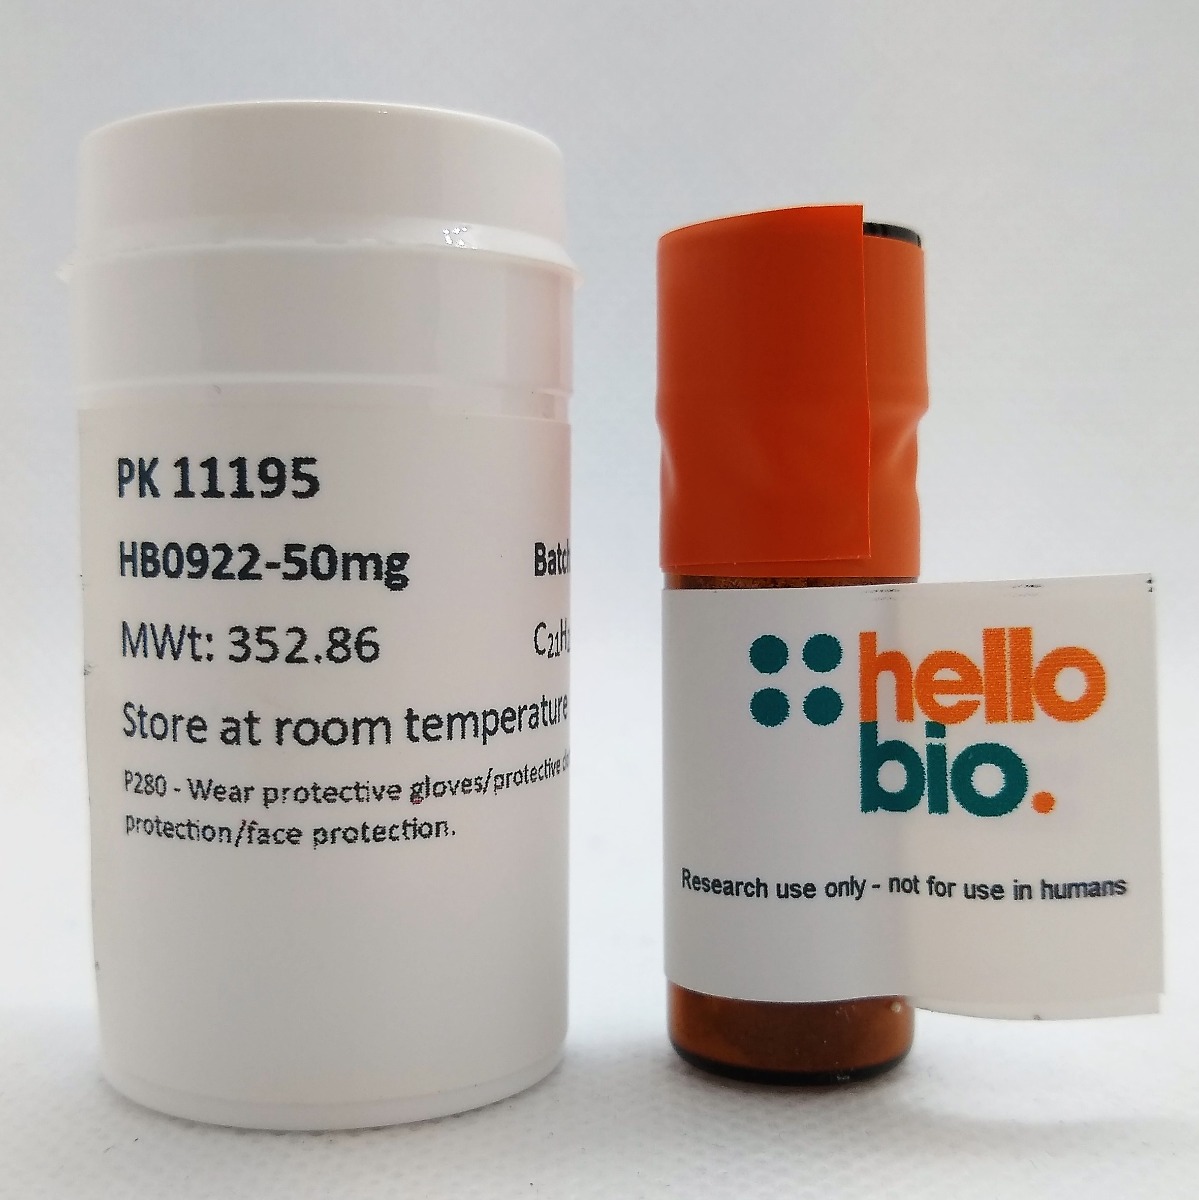 PK 11195 product vial image | Hello Bio